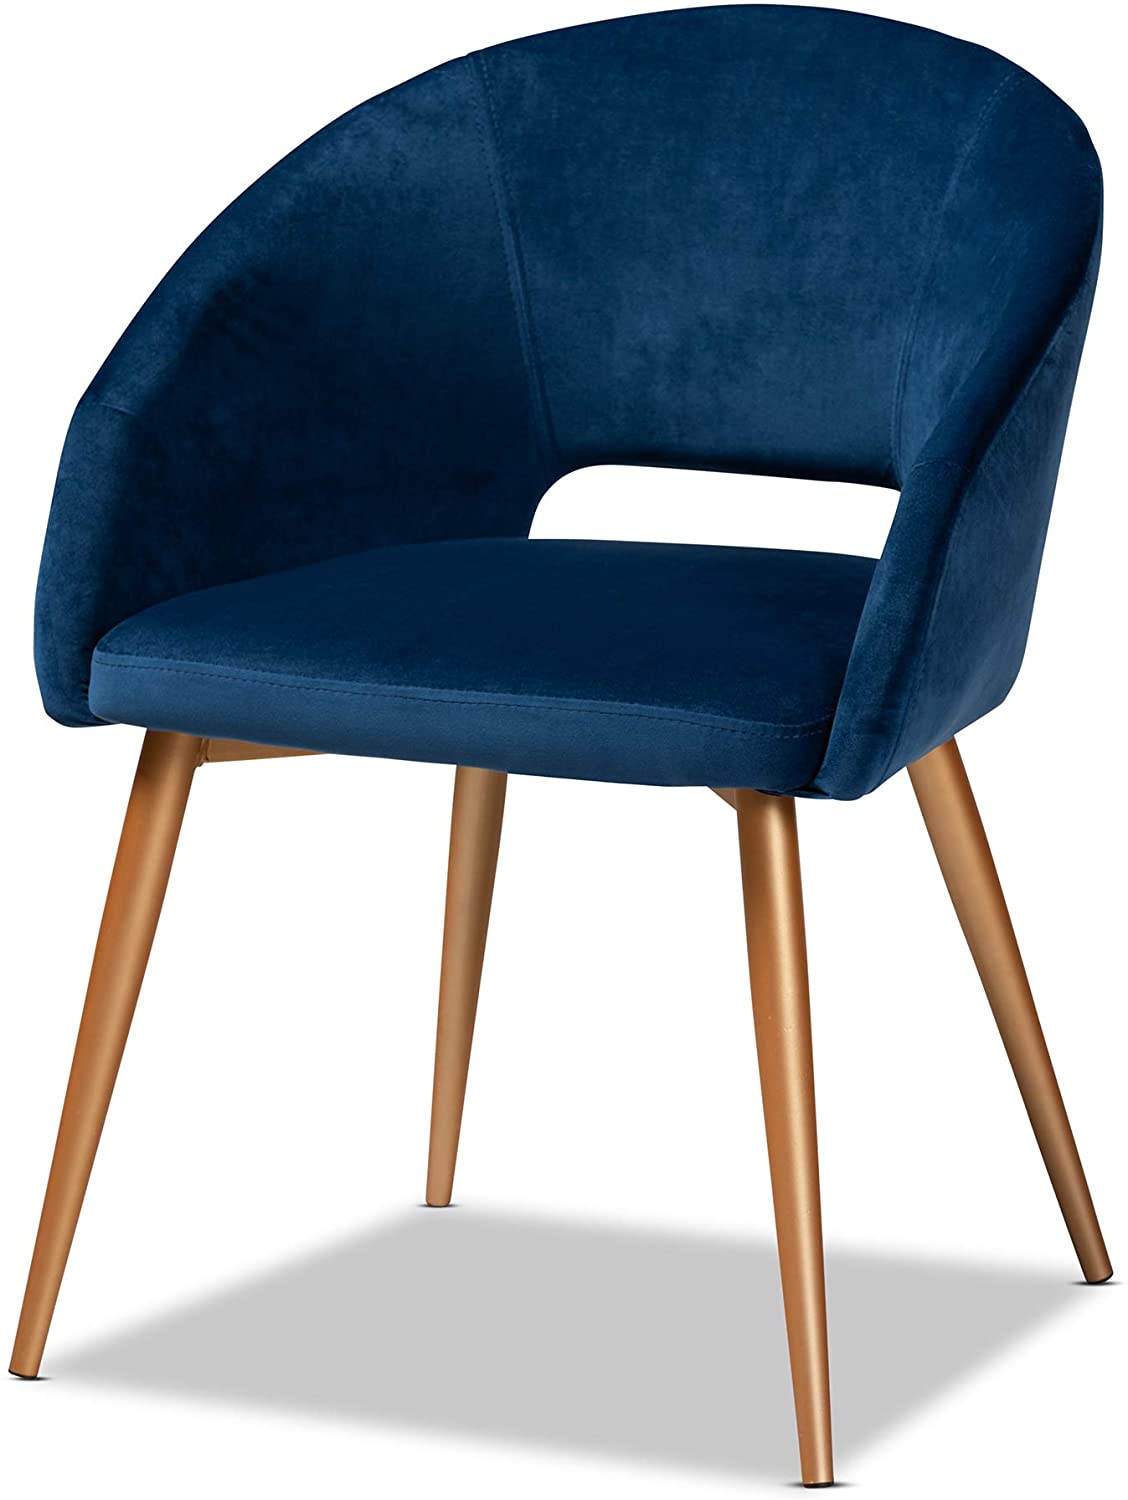 B07YD5GHG8 Baxton Studio Dining Chairs, Navy Blue/Gold